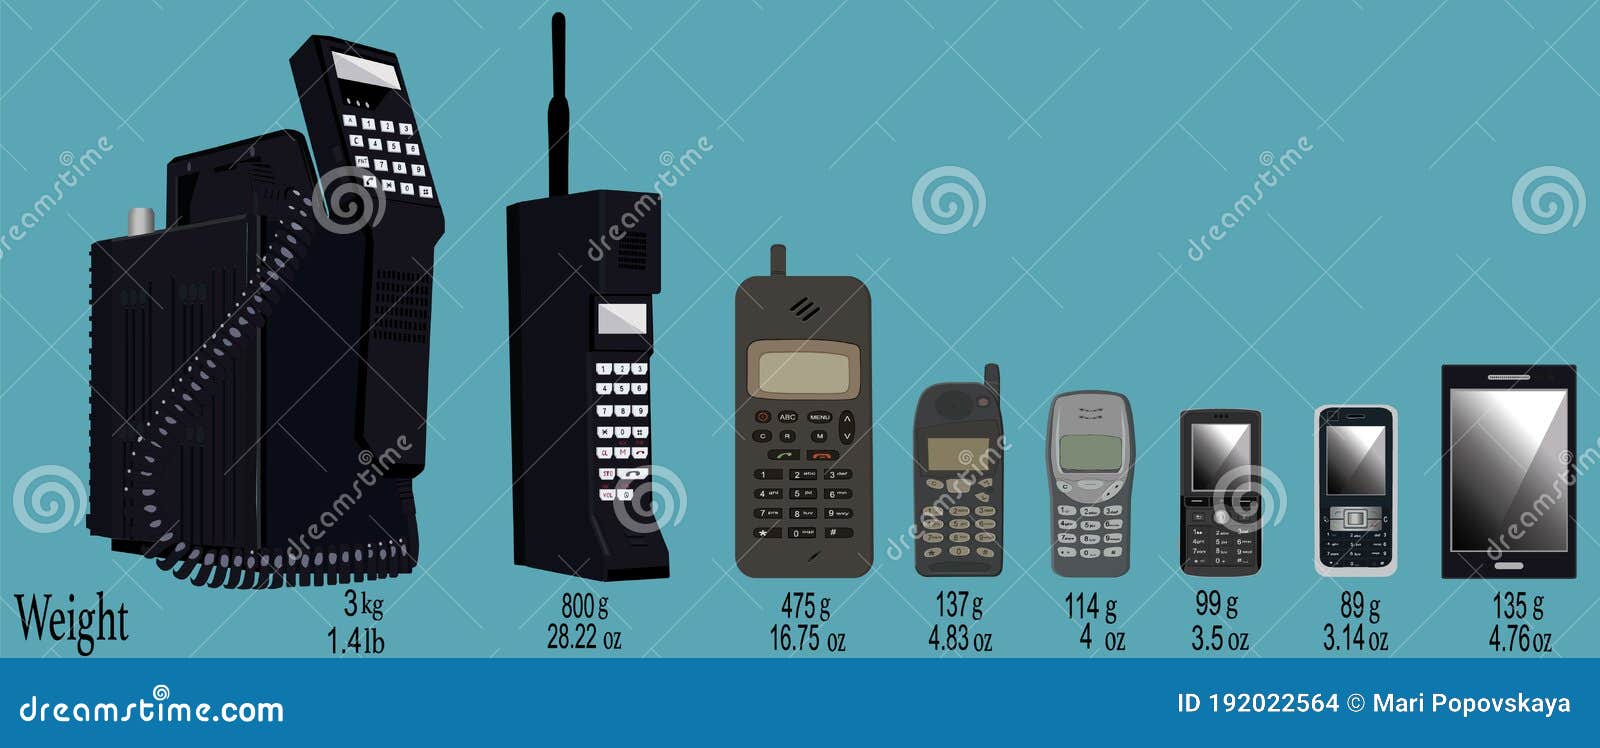 Evolution Of Mobile Communication 1g To 5g Cartoon Vector